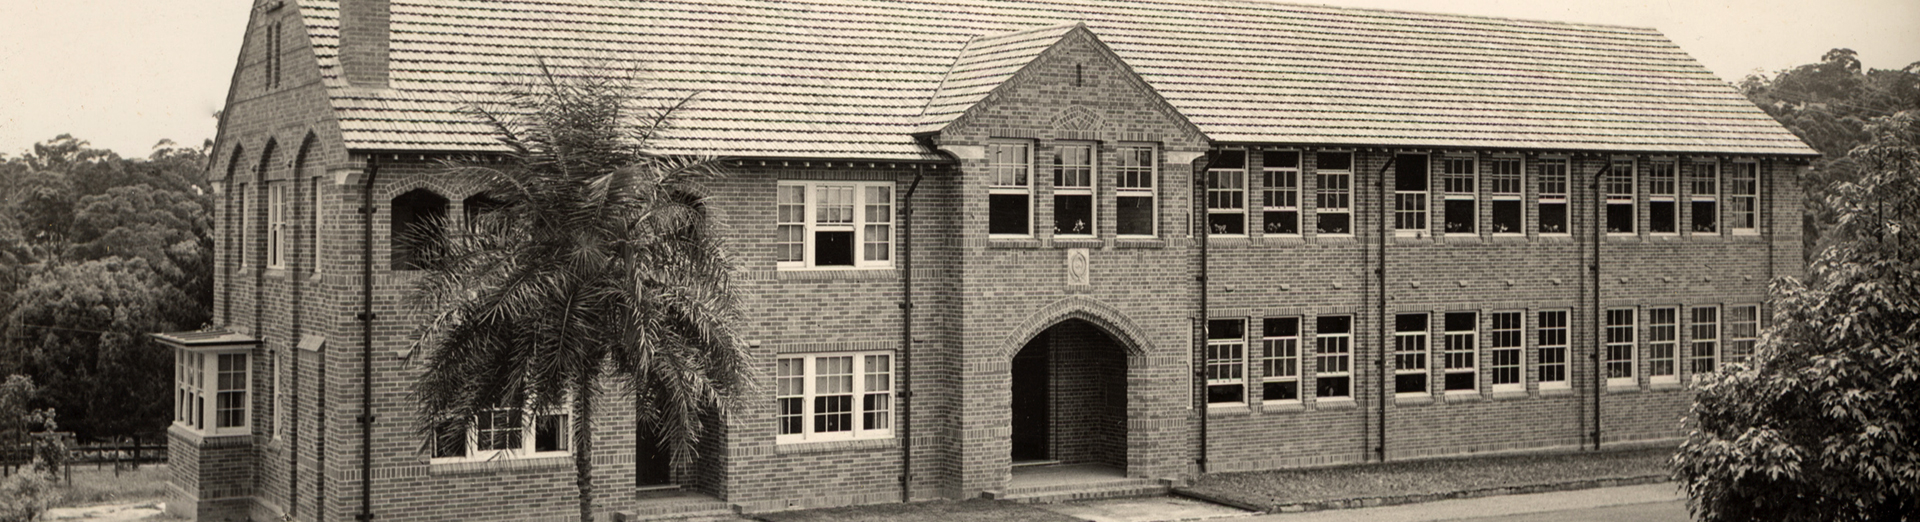 Opening of Gillespie-McIllrath House in 1938